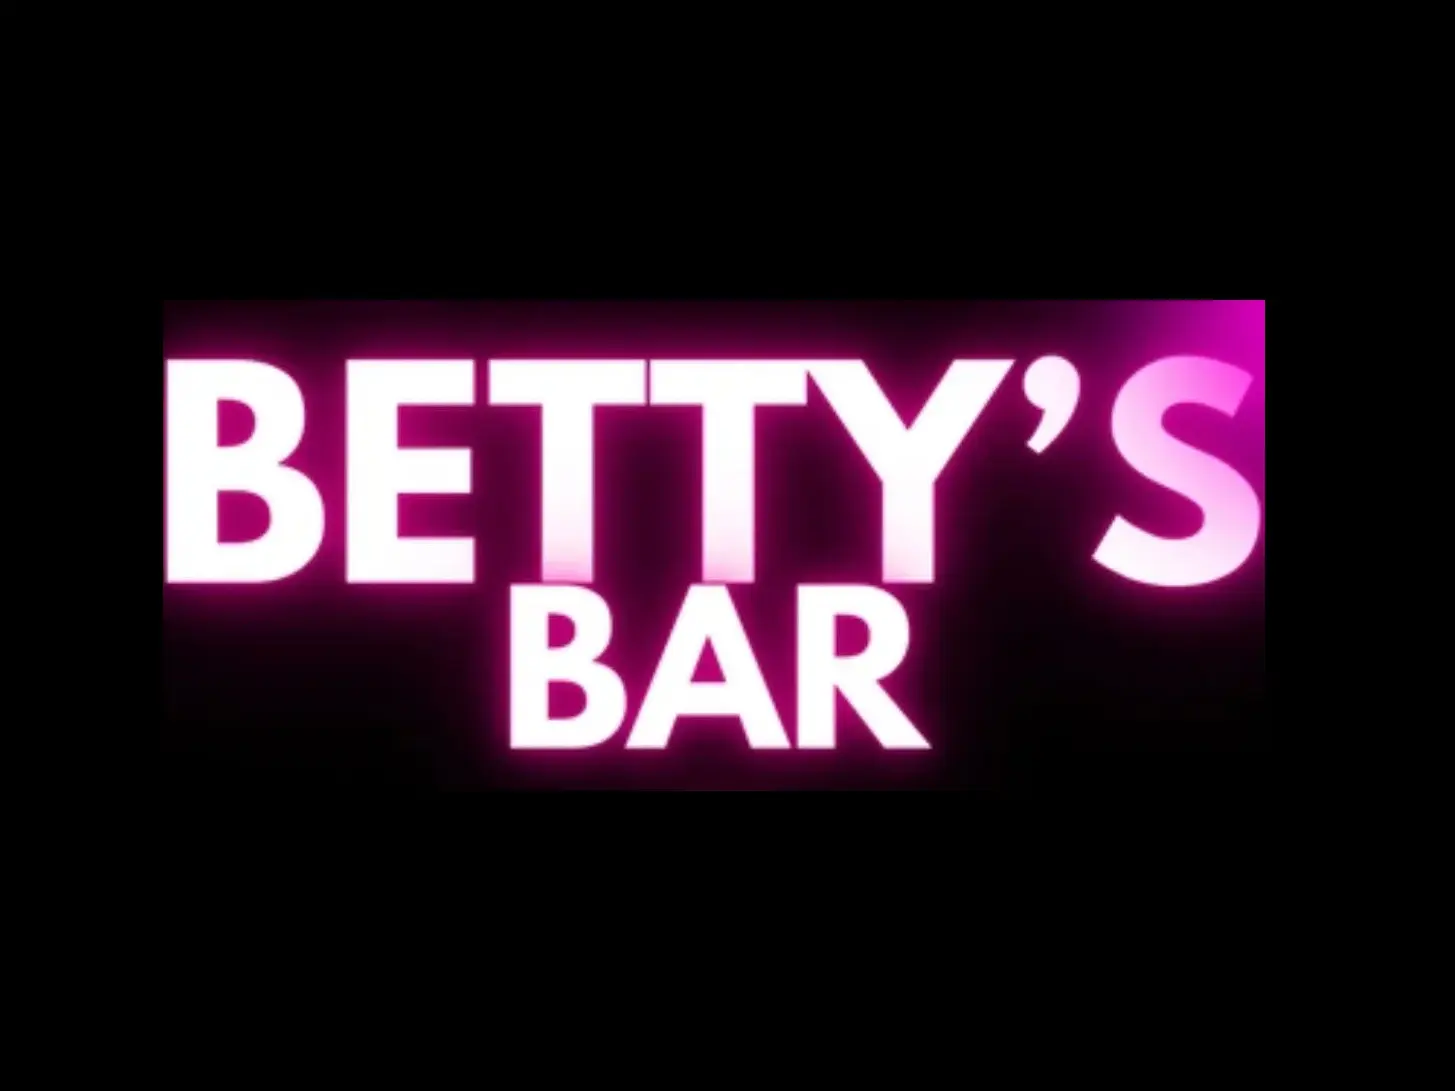 card_image - Betty's Bar